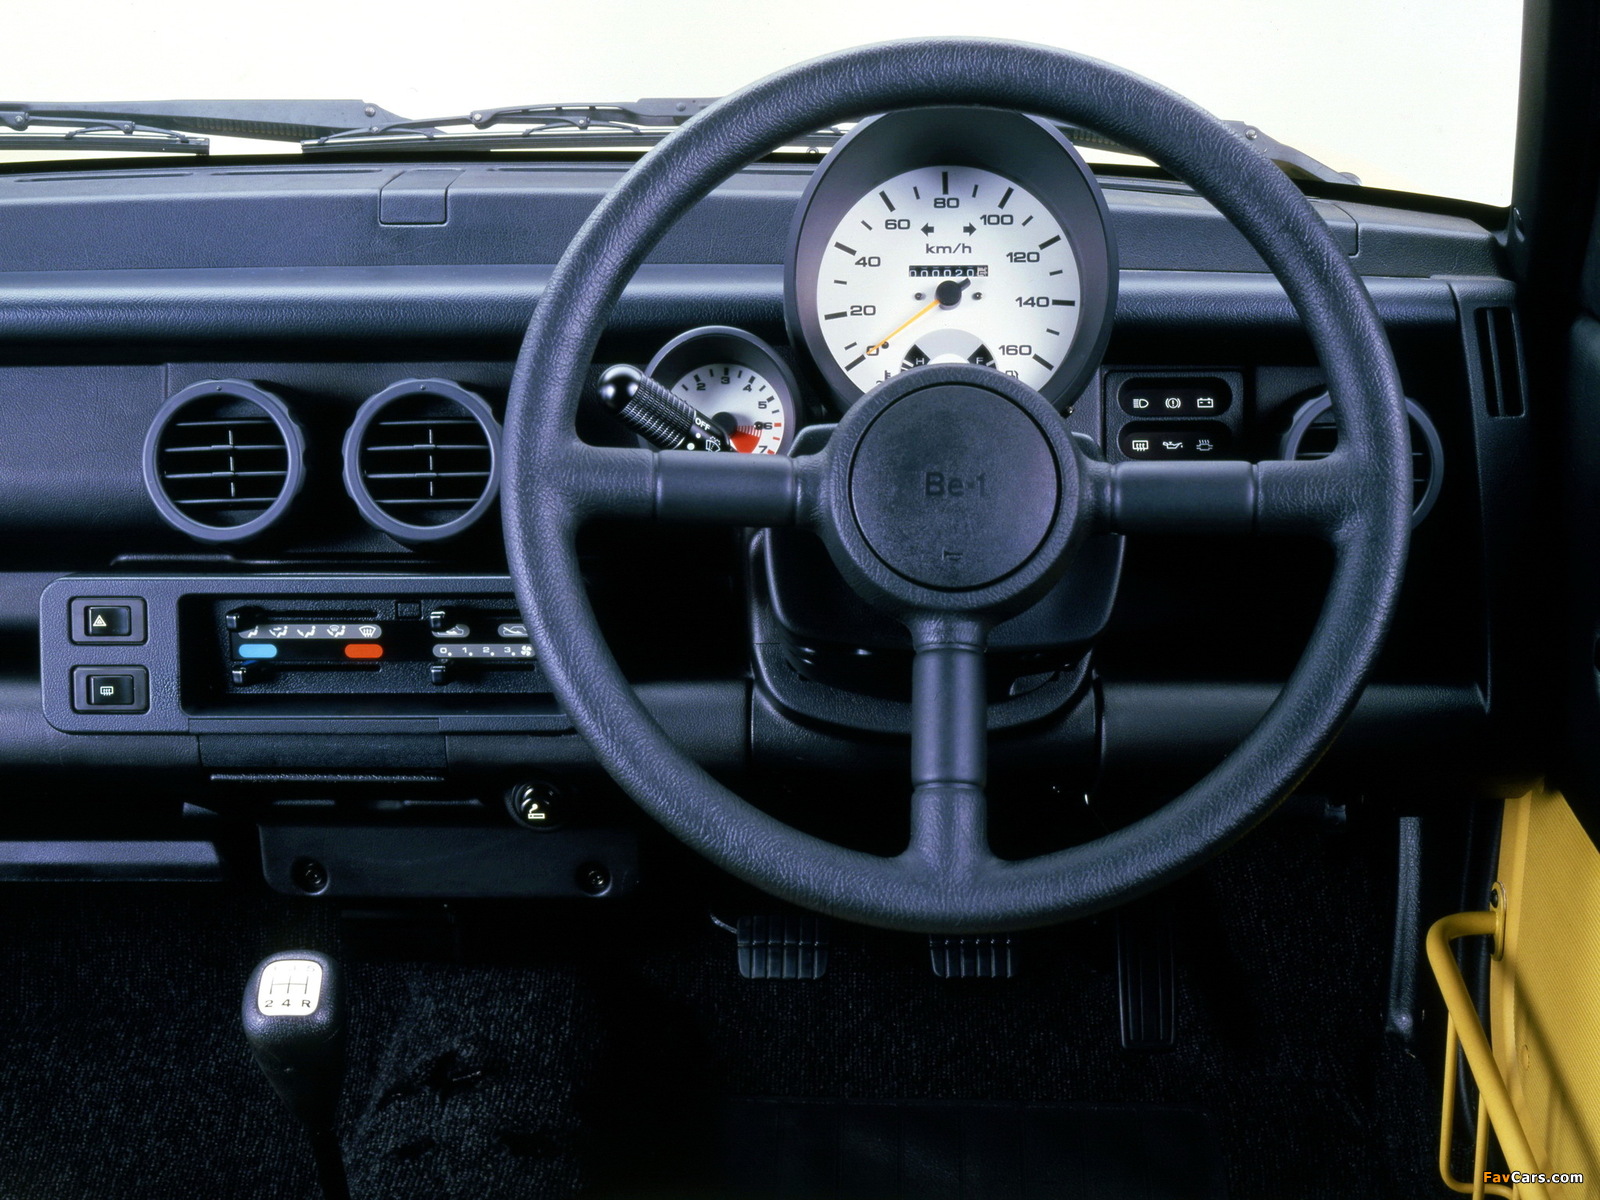 Nissan Be-1 (BK10) 1987–88 images (1600 x 1200)